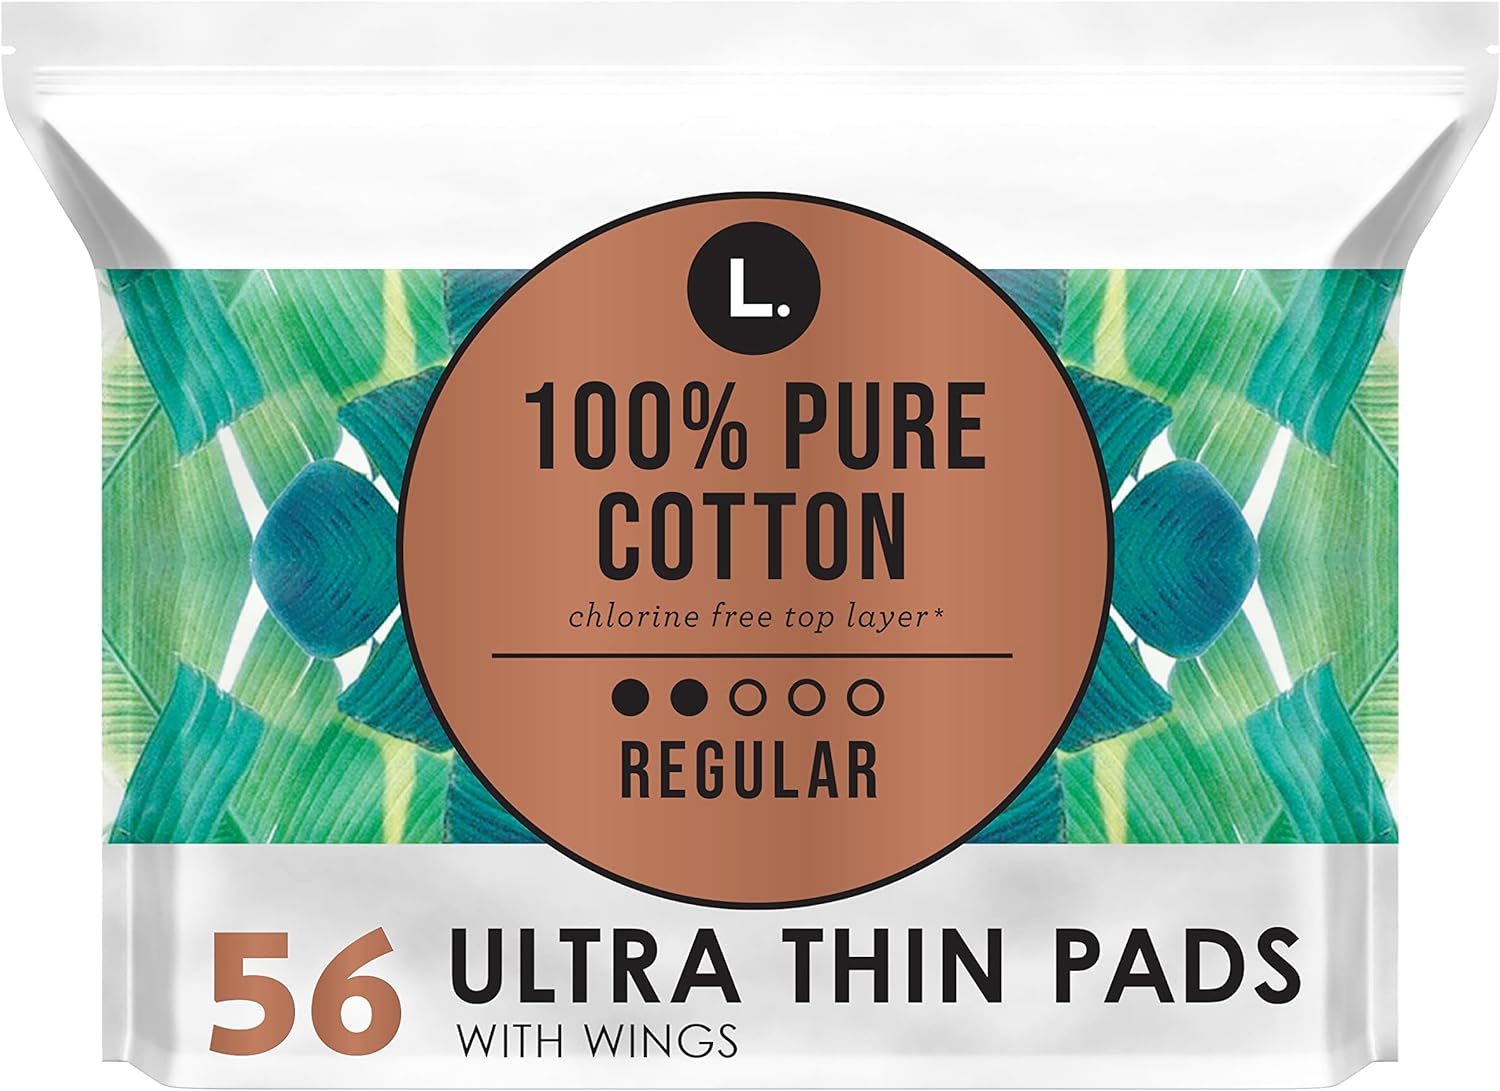 L. Pure Cotton Topsheet Pads Review